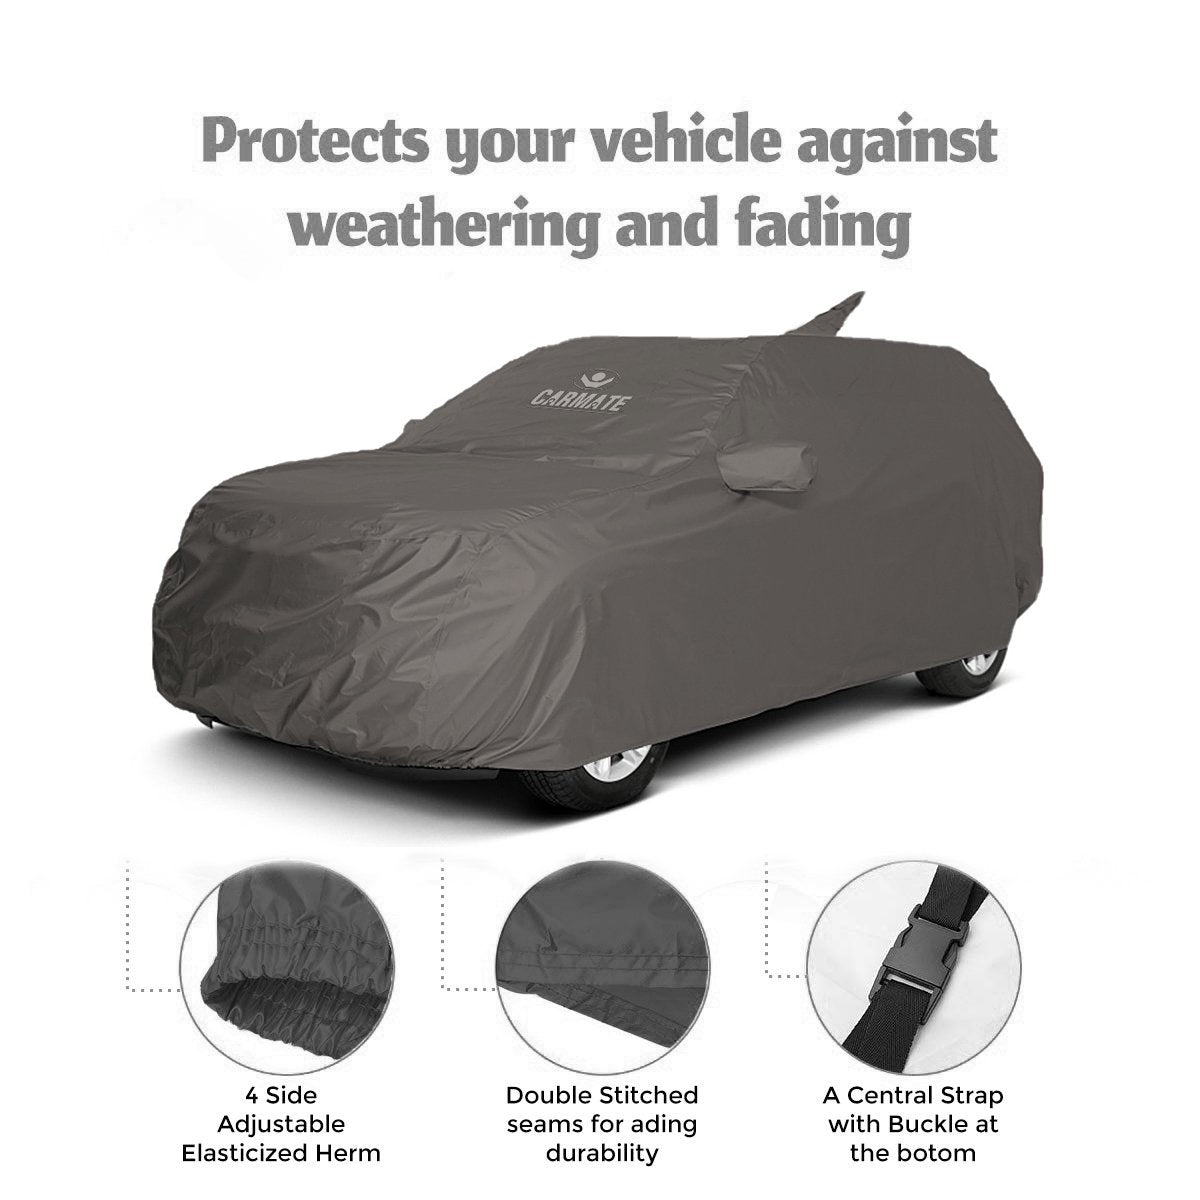 Carmate Car Body Cover 100% Waterproof Pride (Grey) for Mercedes Benz - S500 - CARMATE®